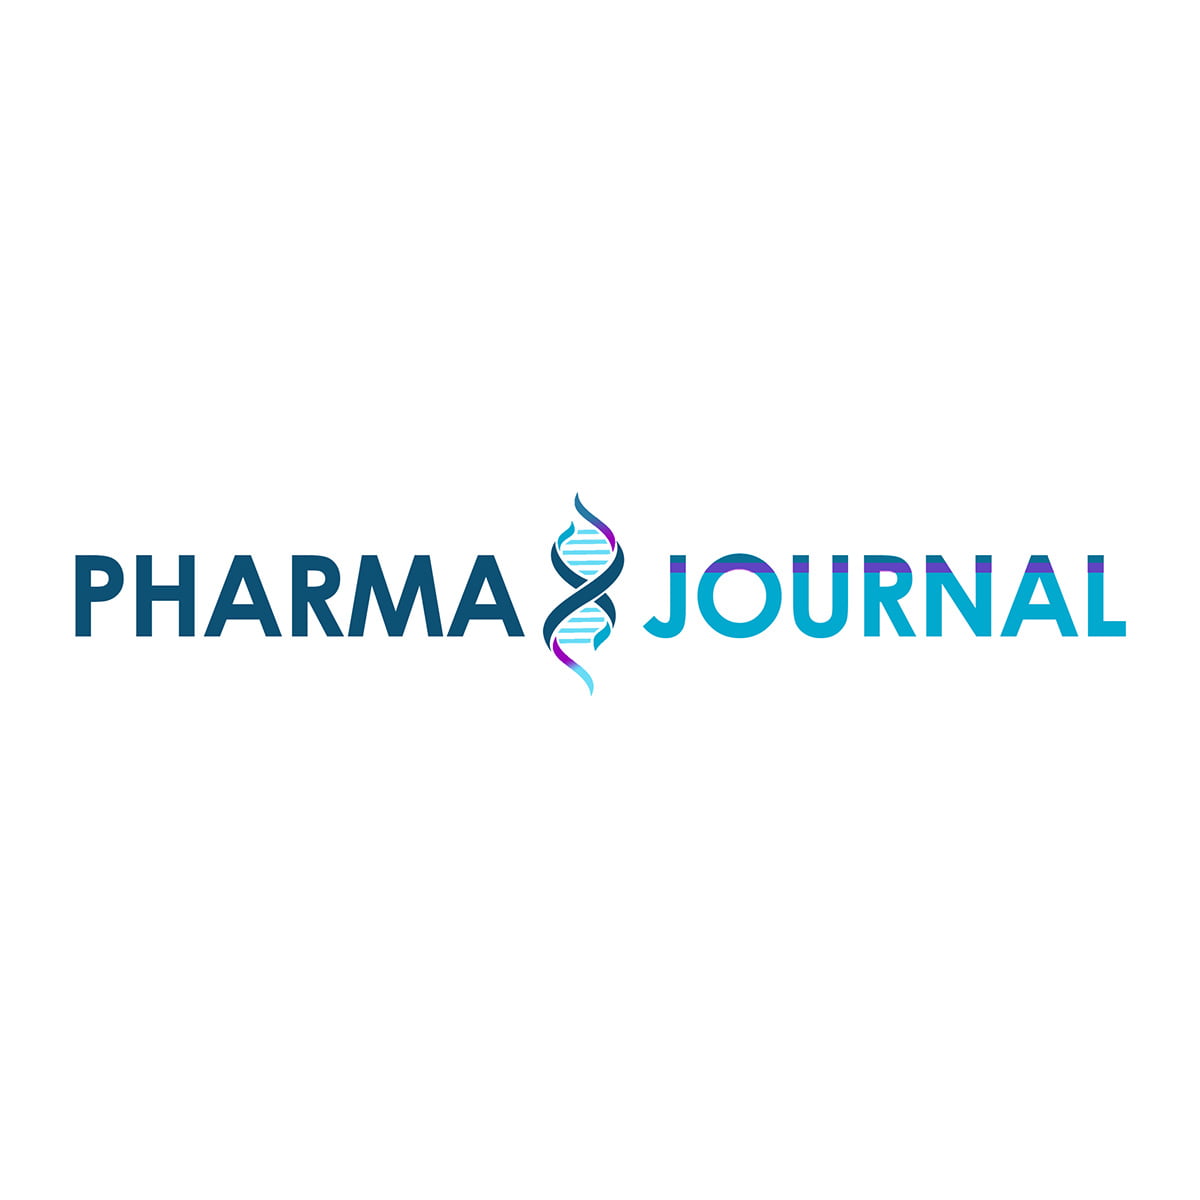 Pharma Journal